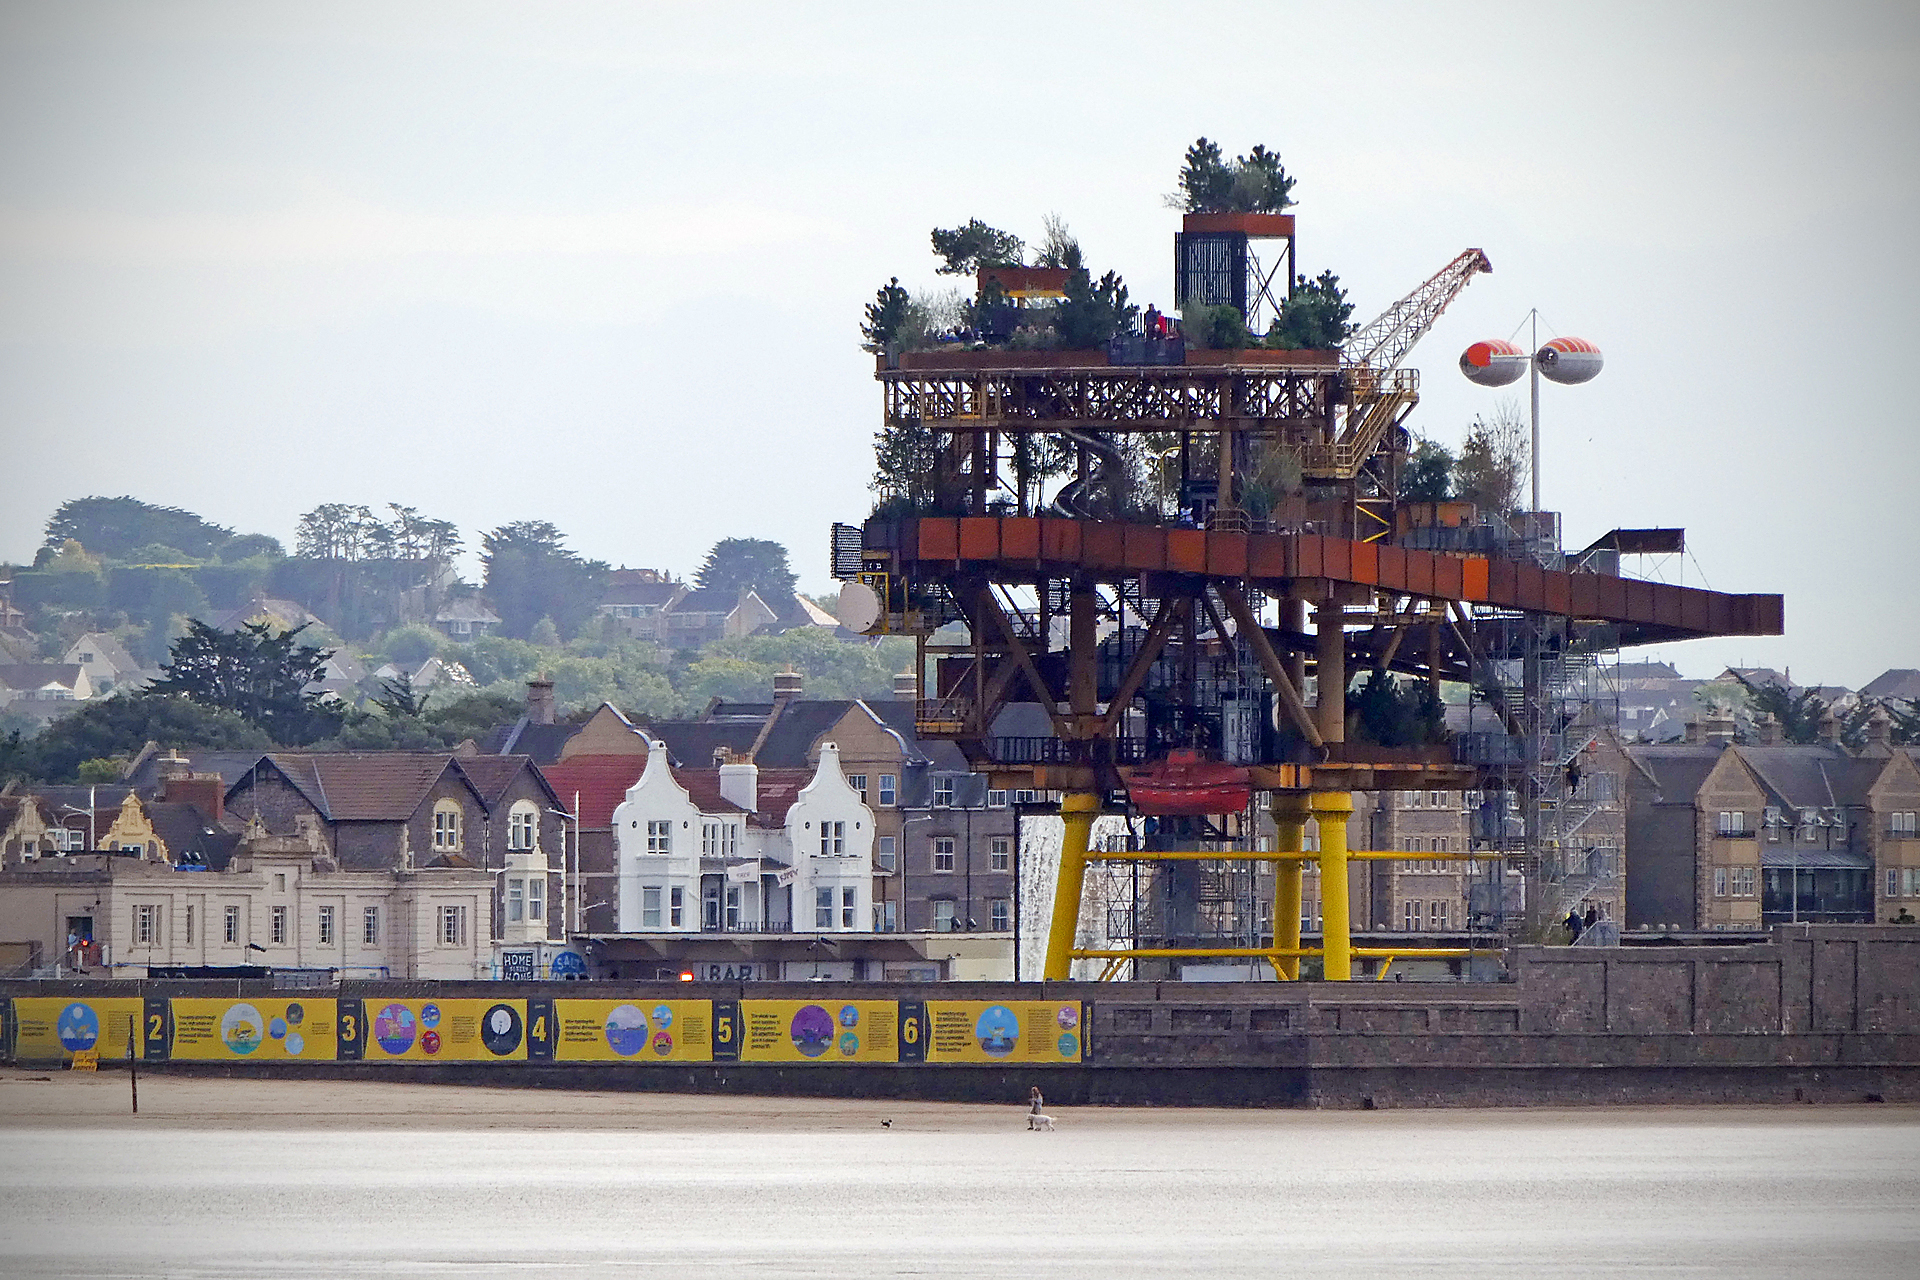 See Monster, plataforma de petróleo desativada no Mar do Norte, Reino Unido